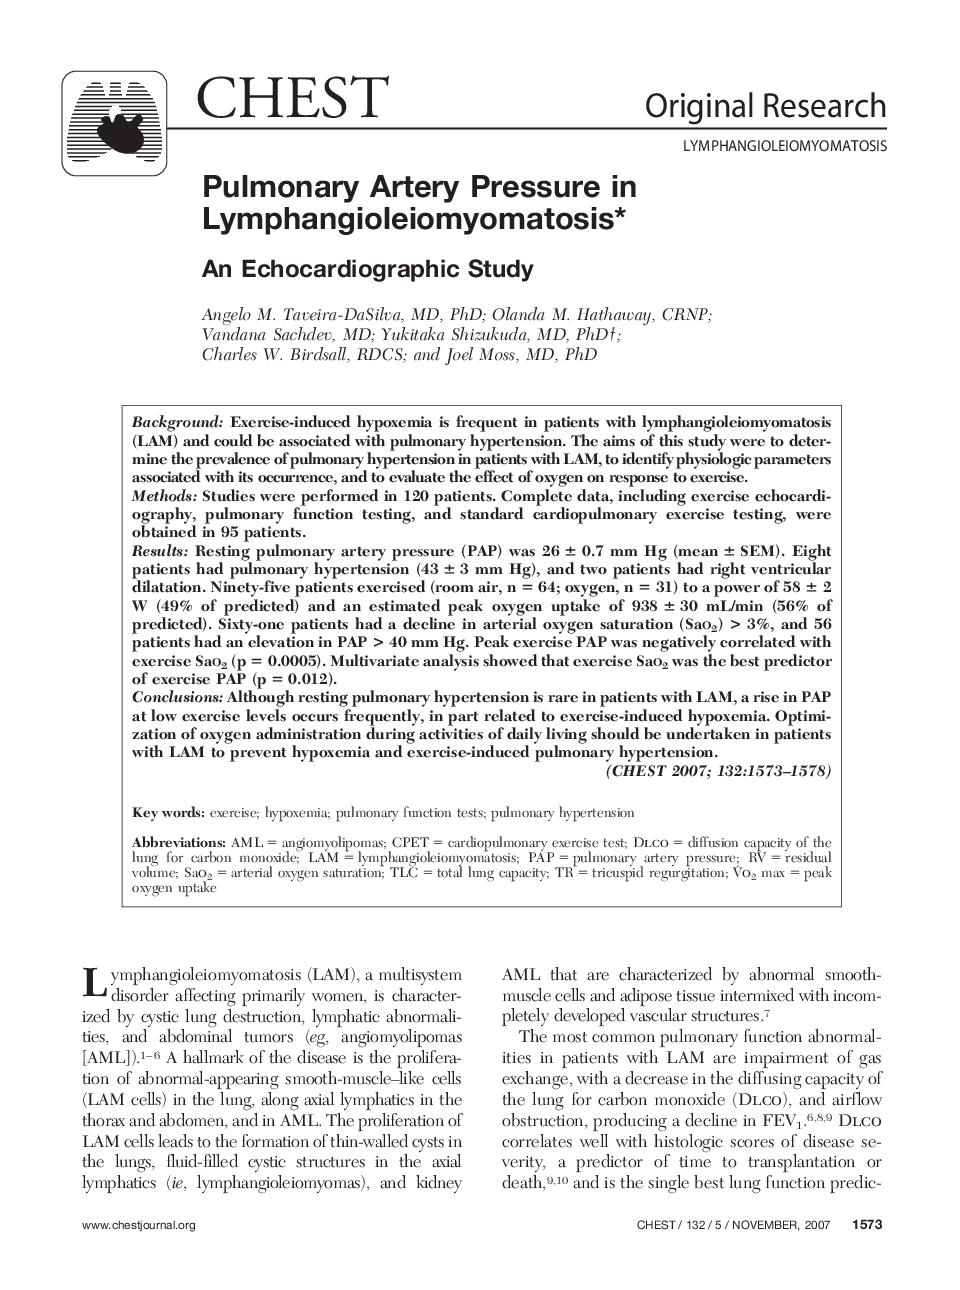 Pulmonary Artery Pressure in Lymphangioleiomyomatosis : An Echocardiographic Study